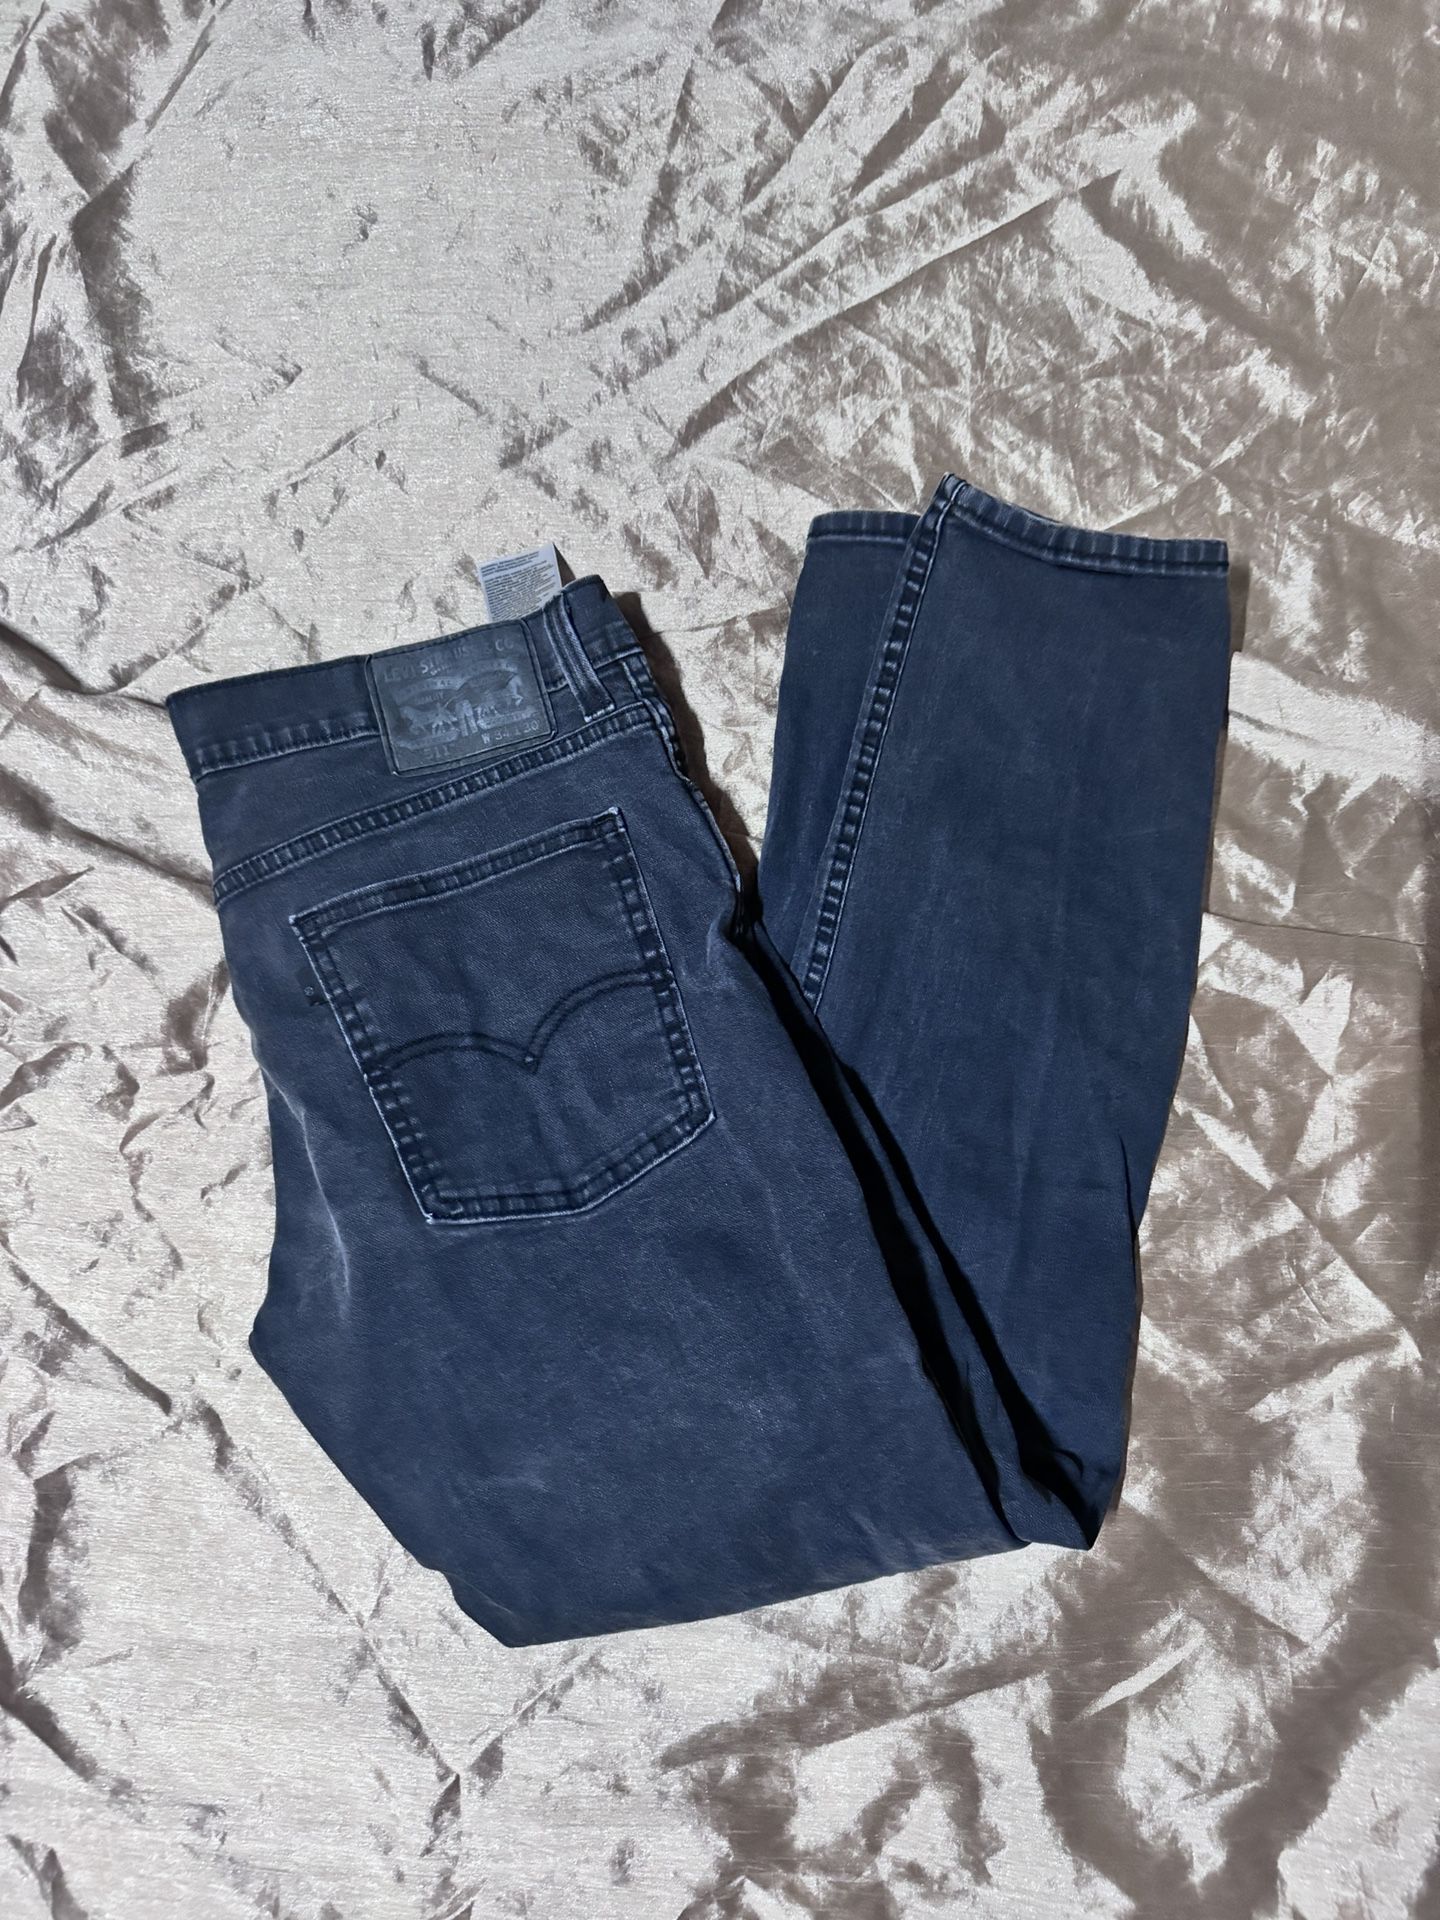 Levi’s 511 Jeans Mens 34x30 Black Slim Straight Leg Dark Wash Denim Stretch Pant